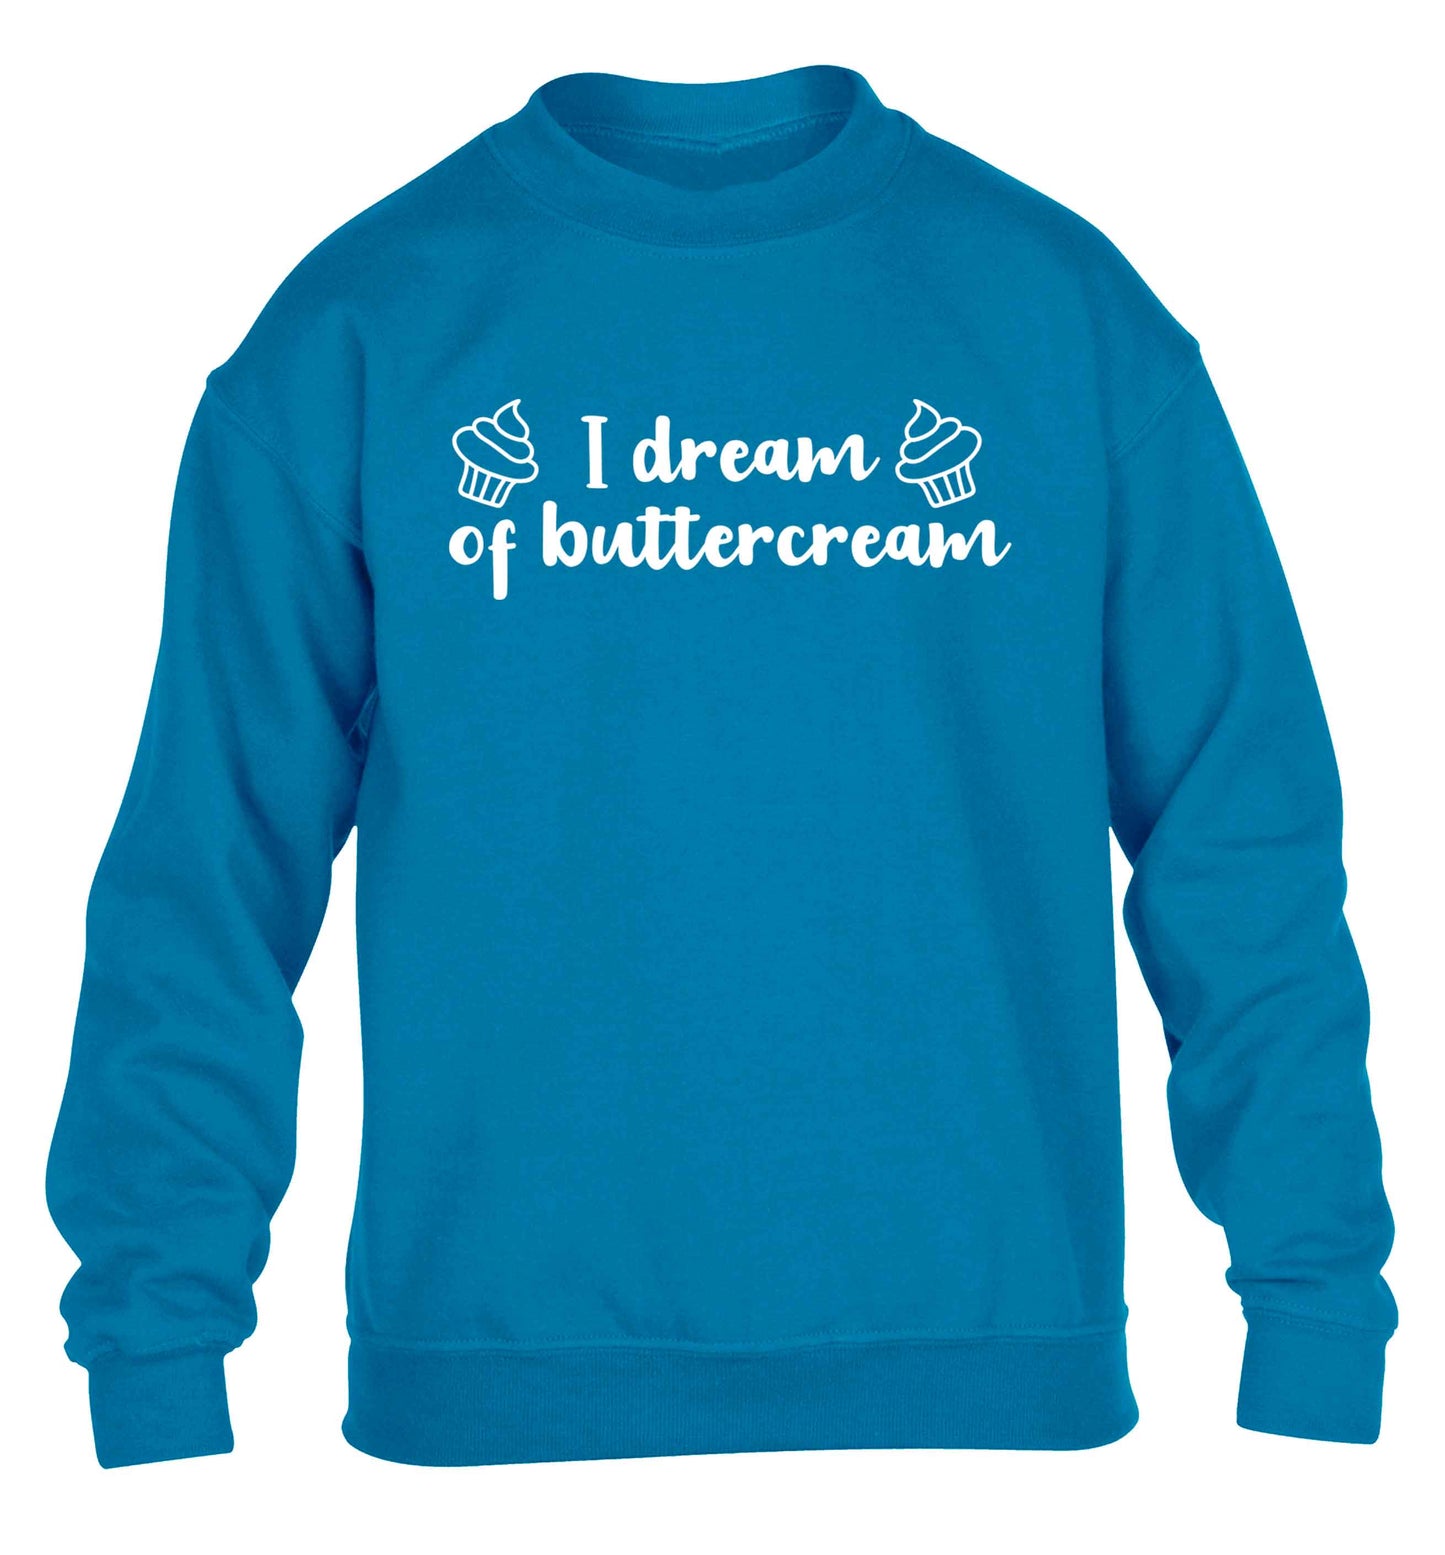 I dream of buttercream children's blue sweater 12-13 Years